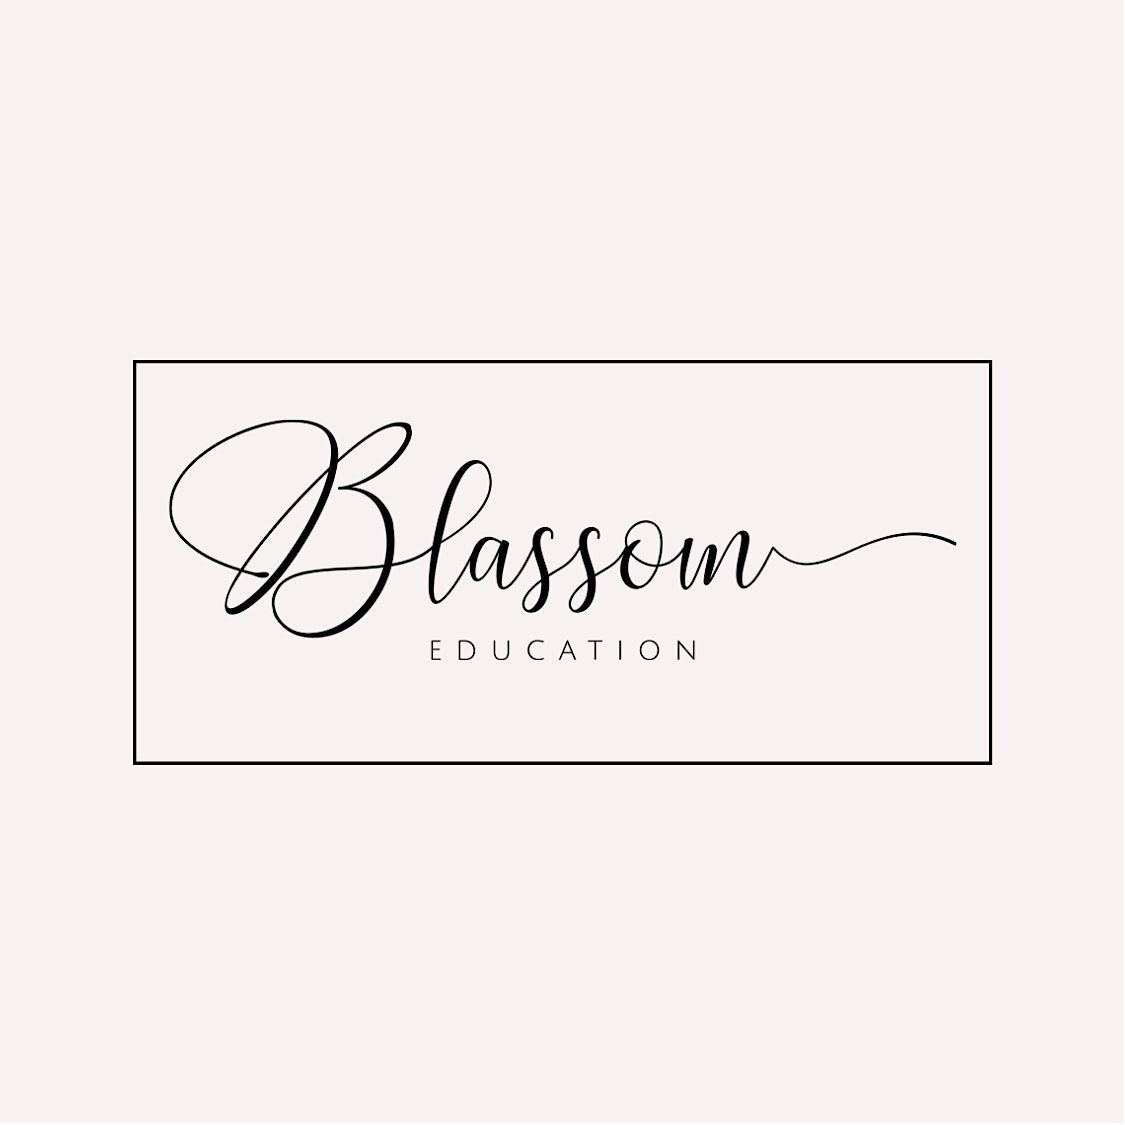 PRIVATE Blassom Blonding 2 Day Demo & Hands-on Class - Austin, TX